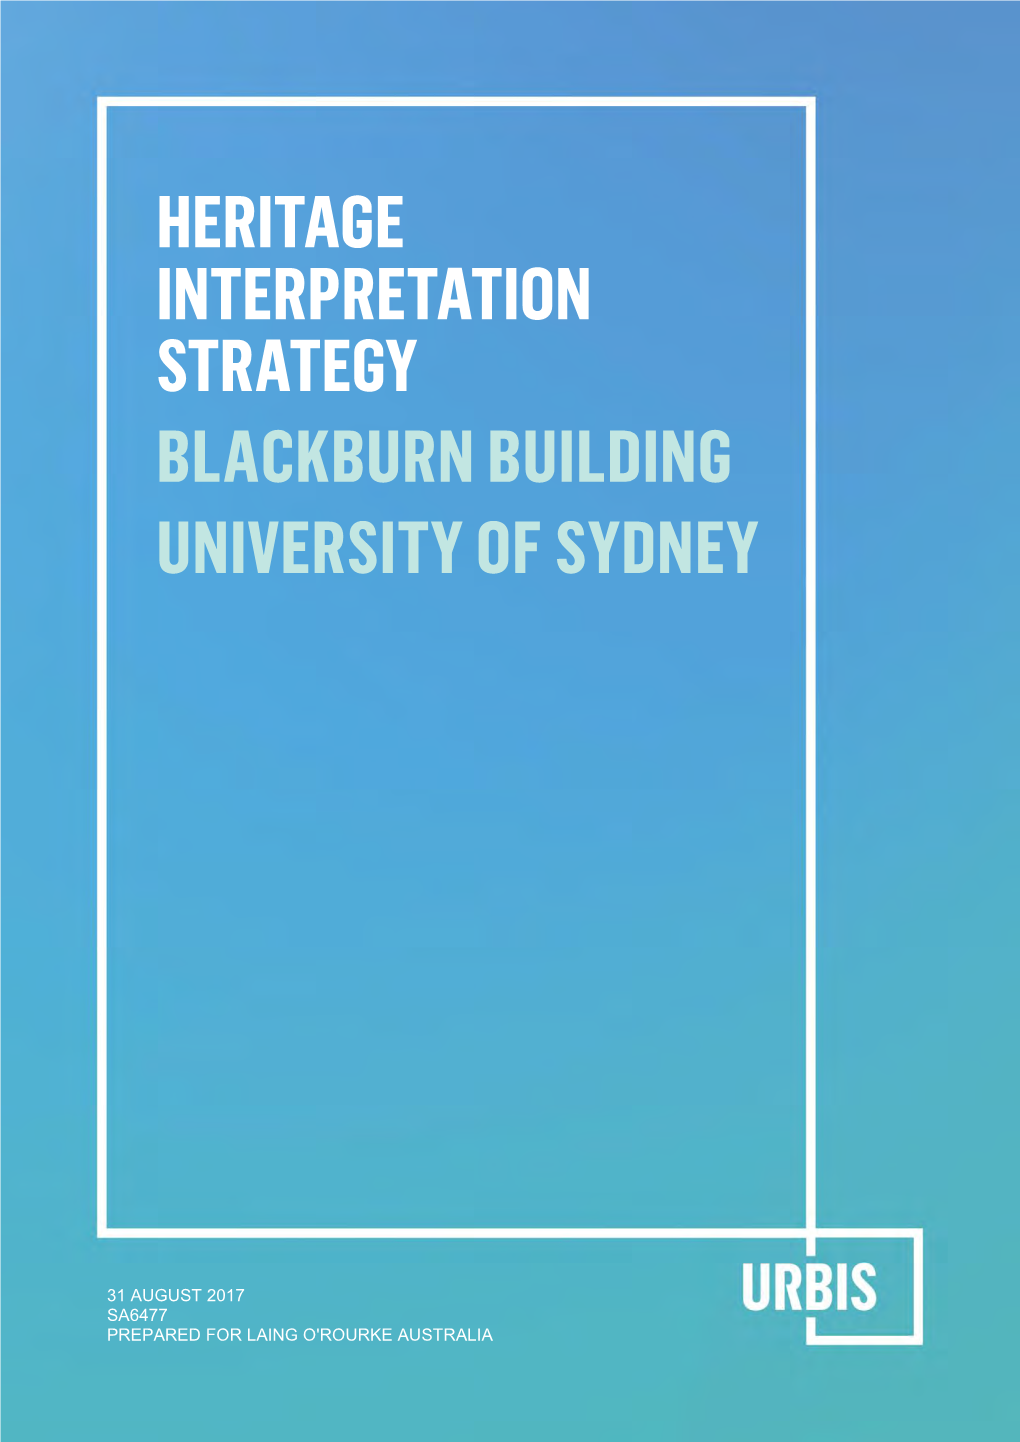 Blackburn Building University of Sydney